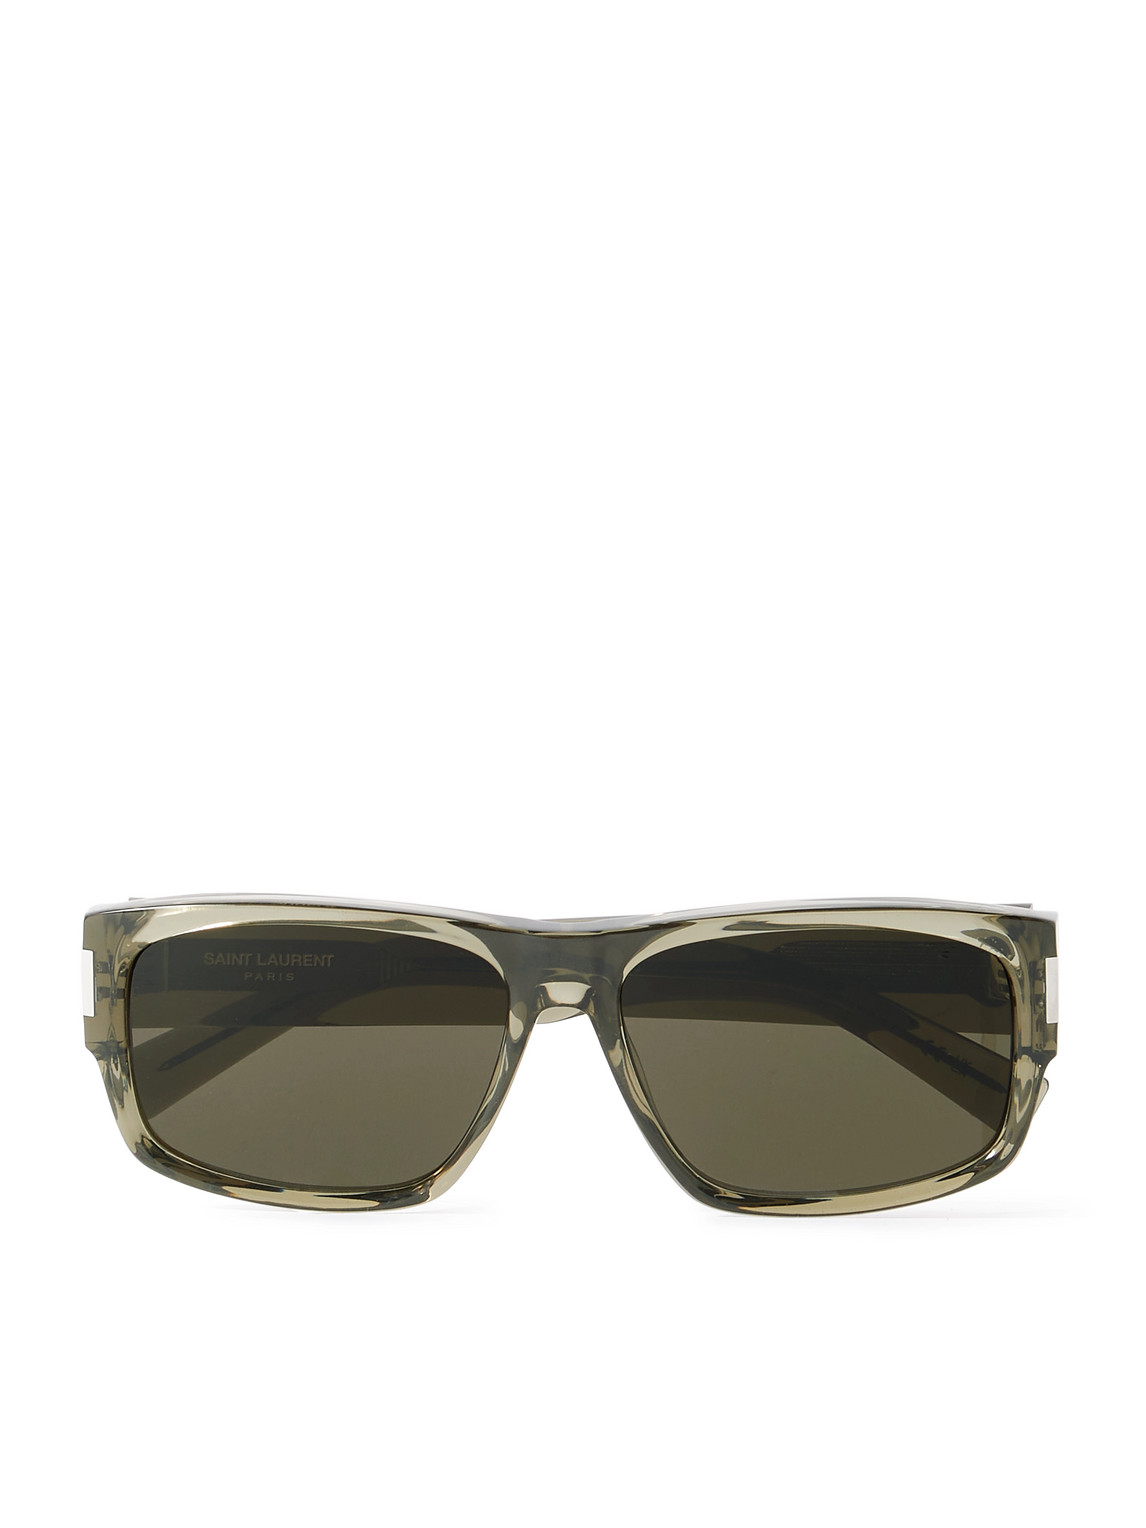 Saint Laurent New Wave D-frame Acetate Sunglasses In Brown